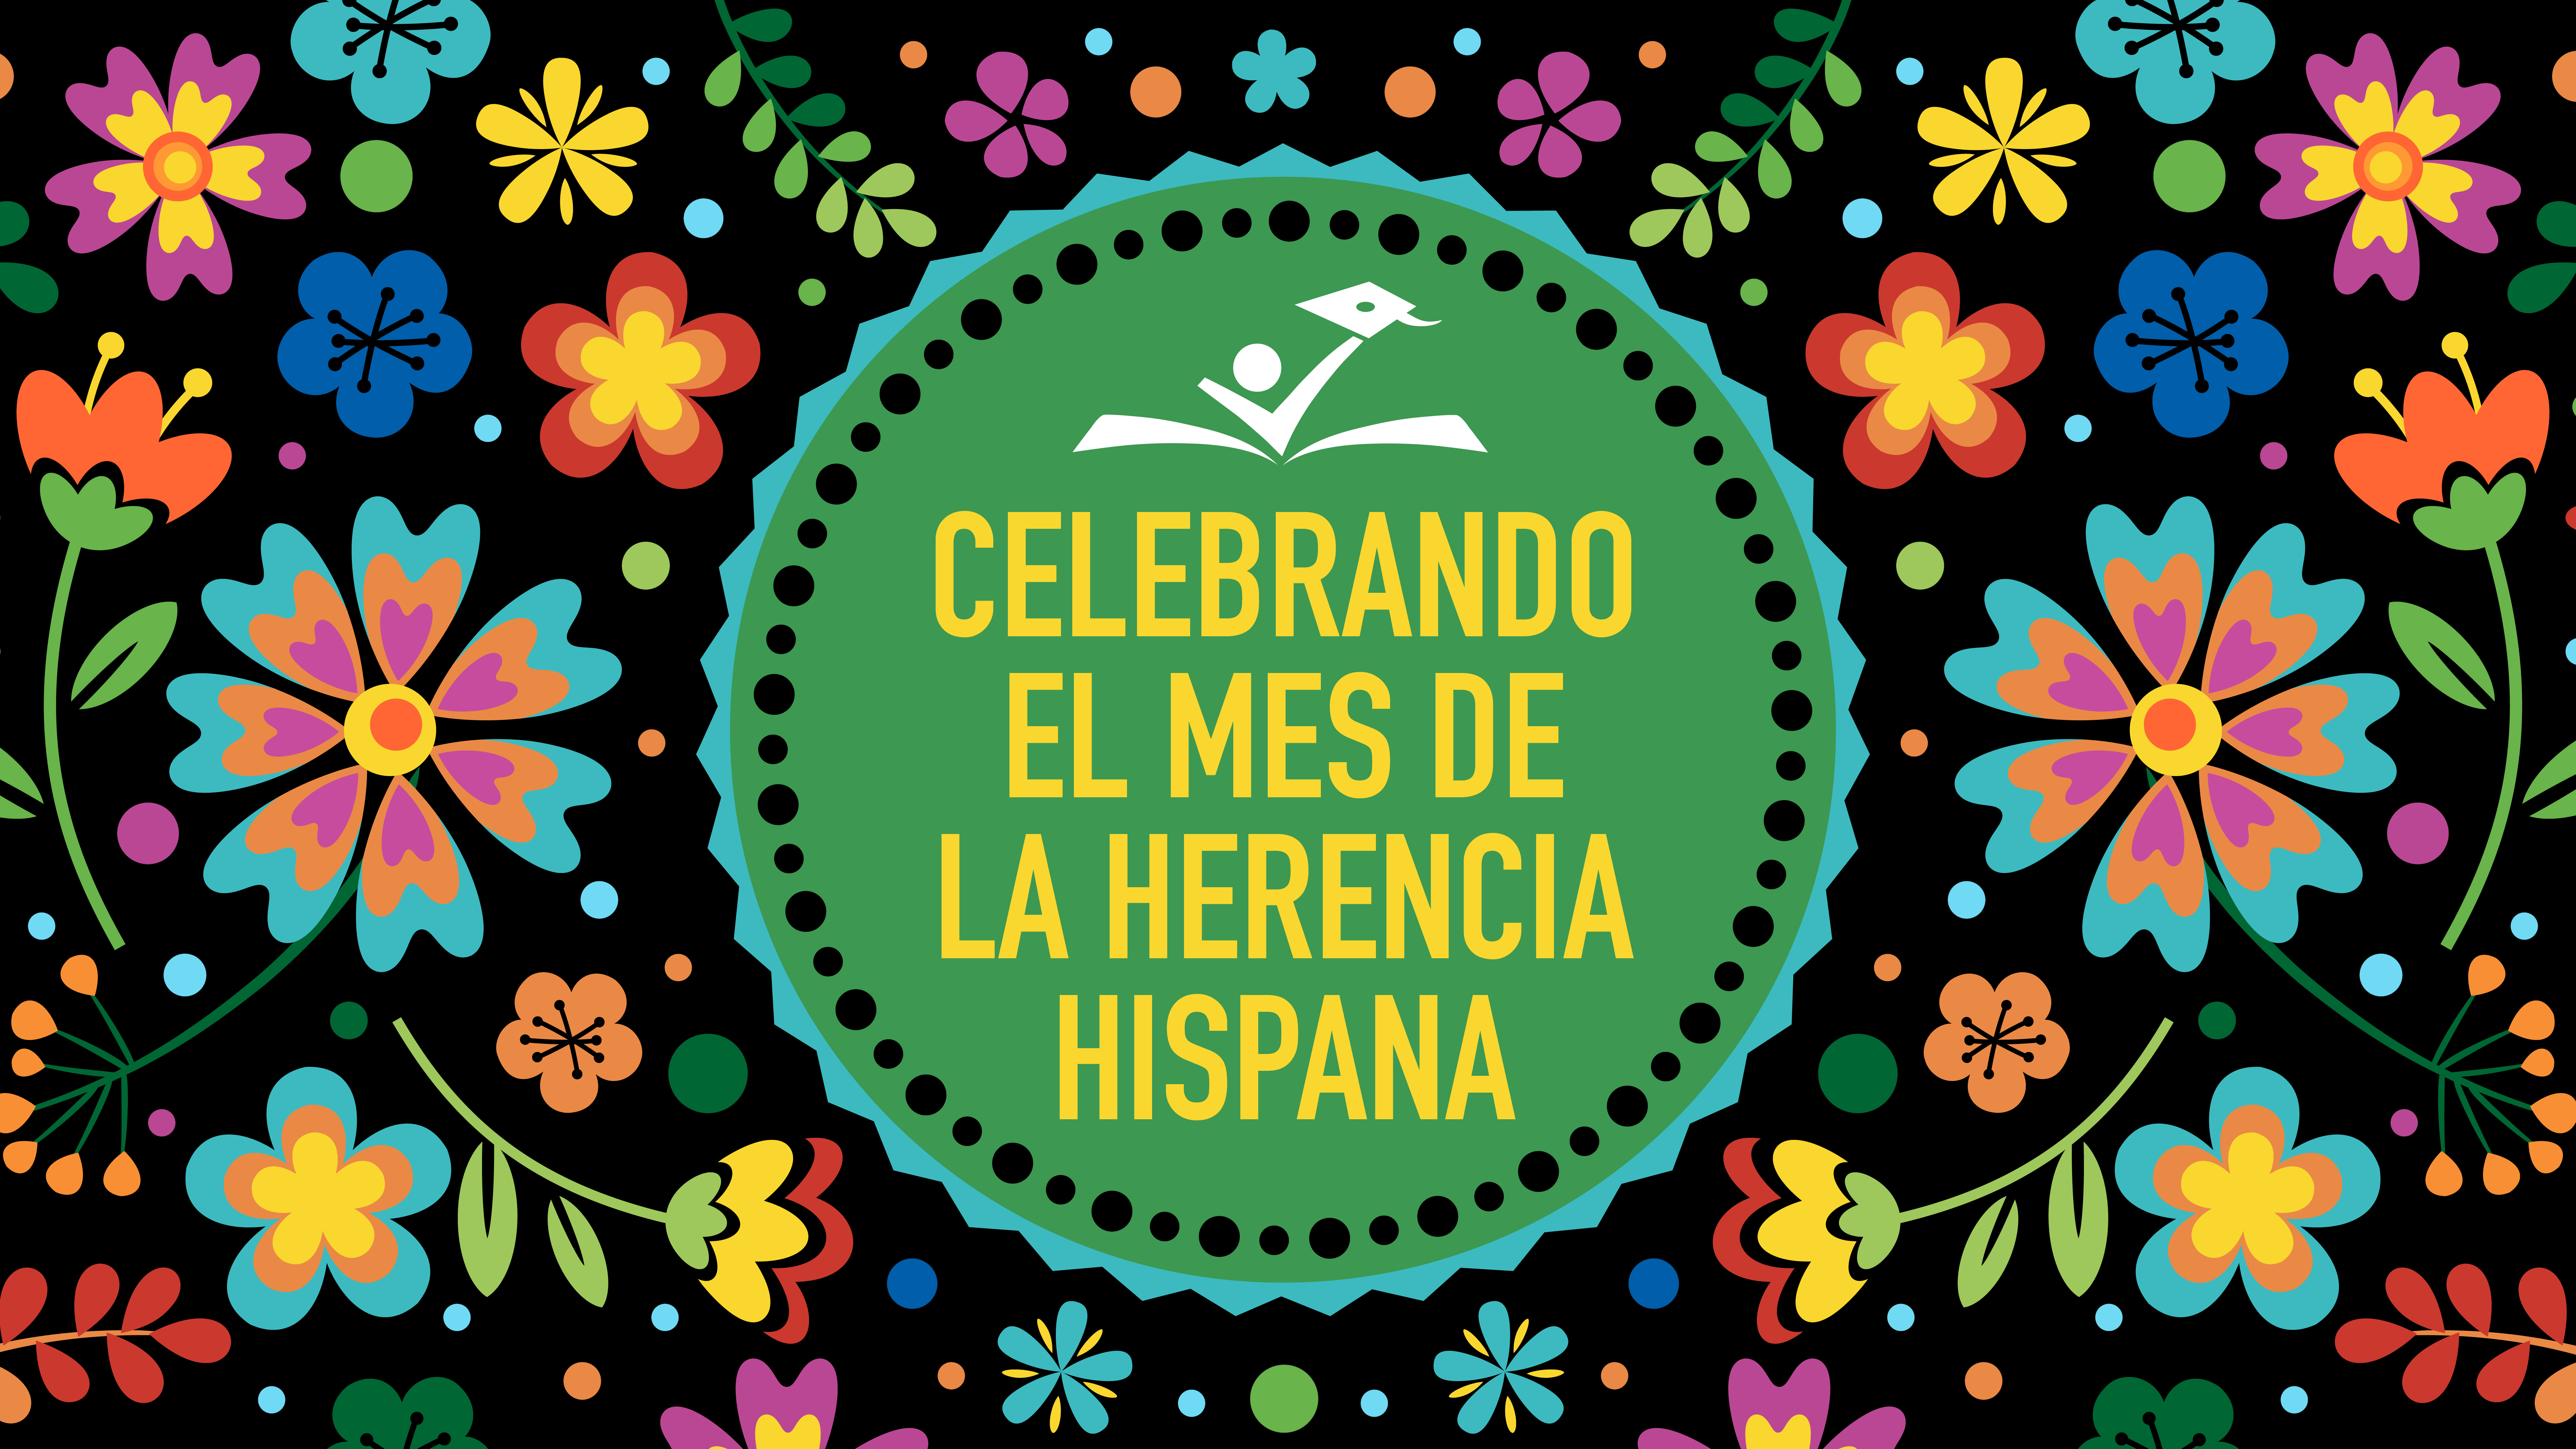 Hispanic Heritage Month with flowers